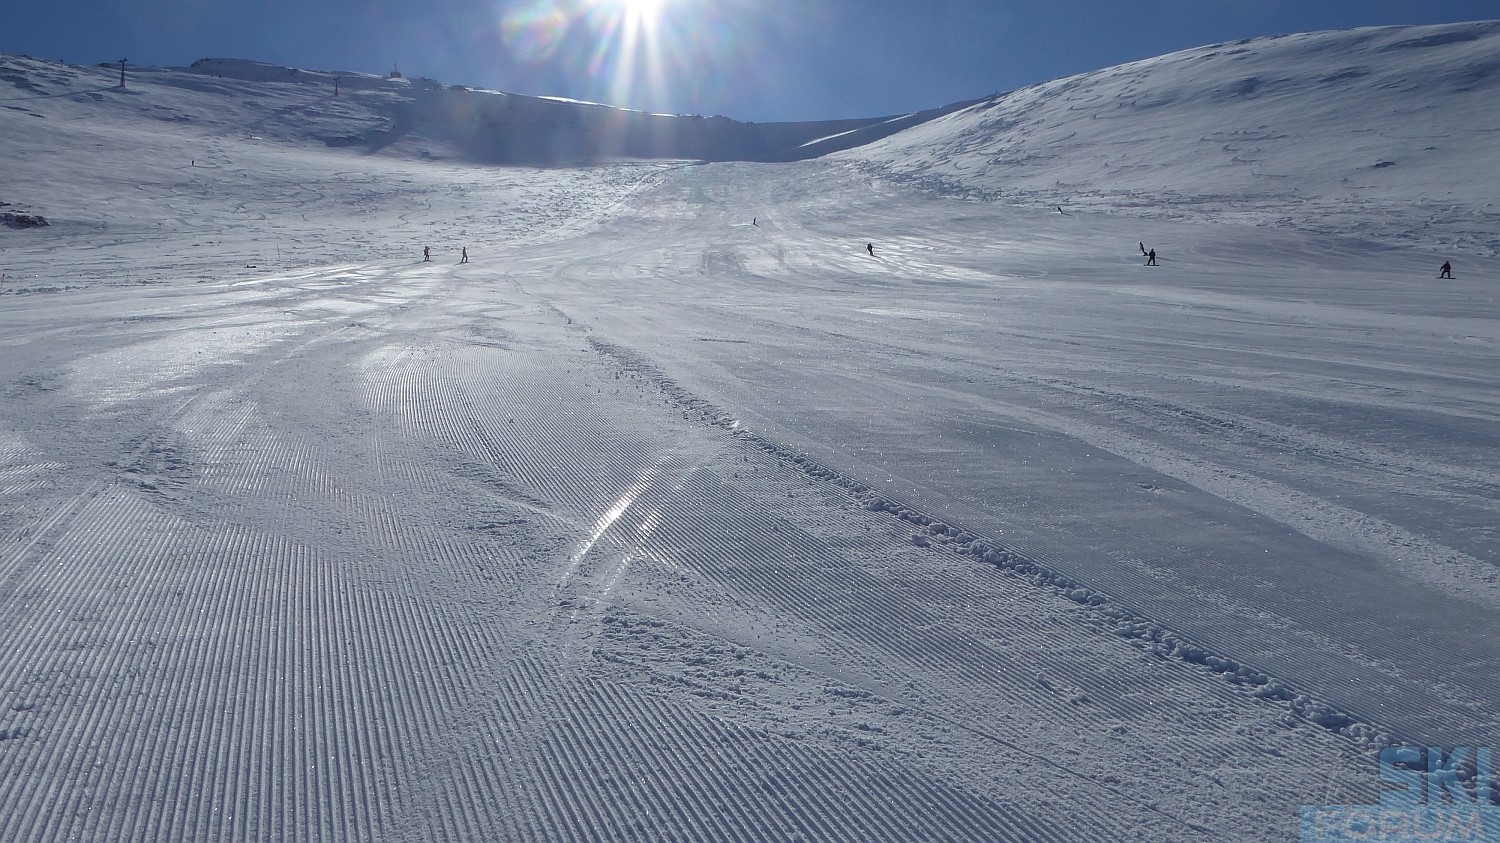 241797-skiing-in-zakopane-poland-31.jpg